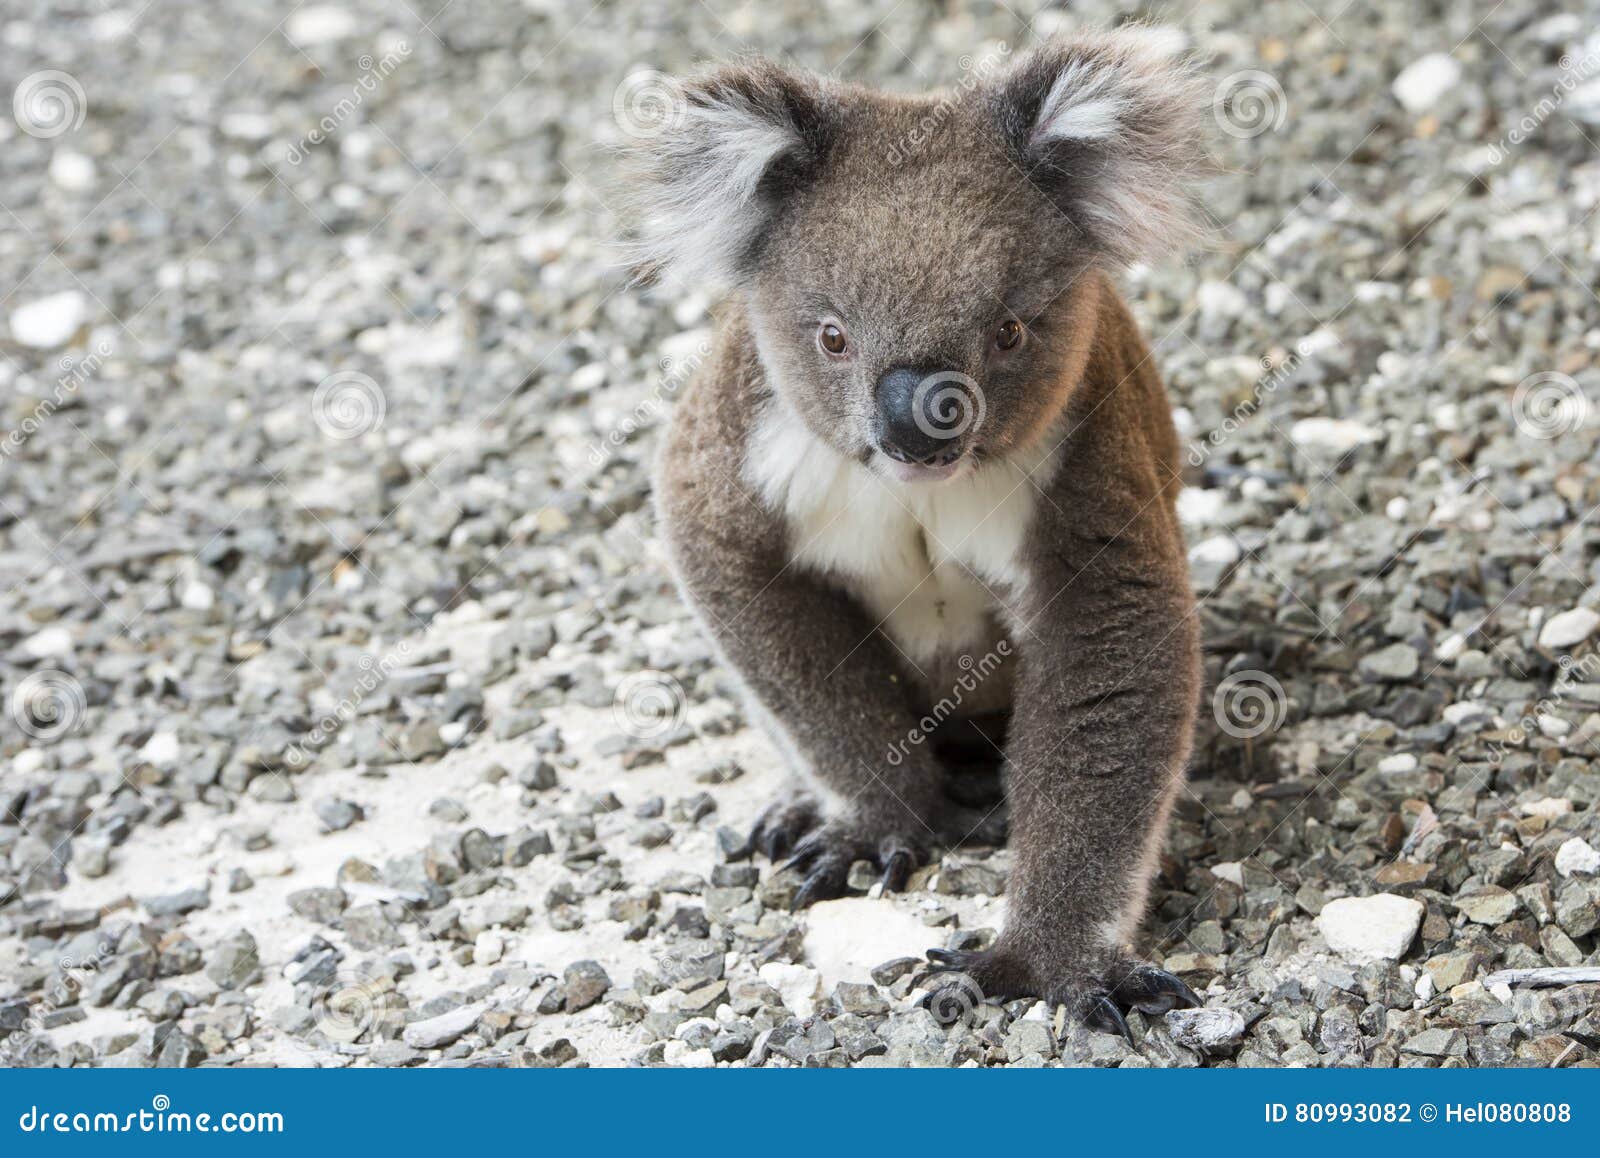 koala, kangaroo island, australia